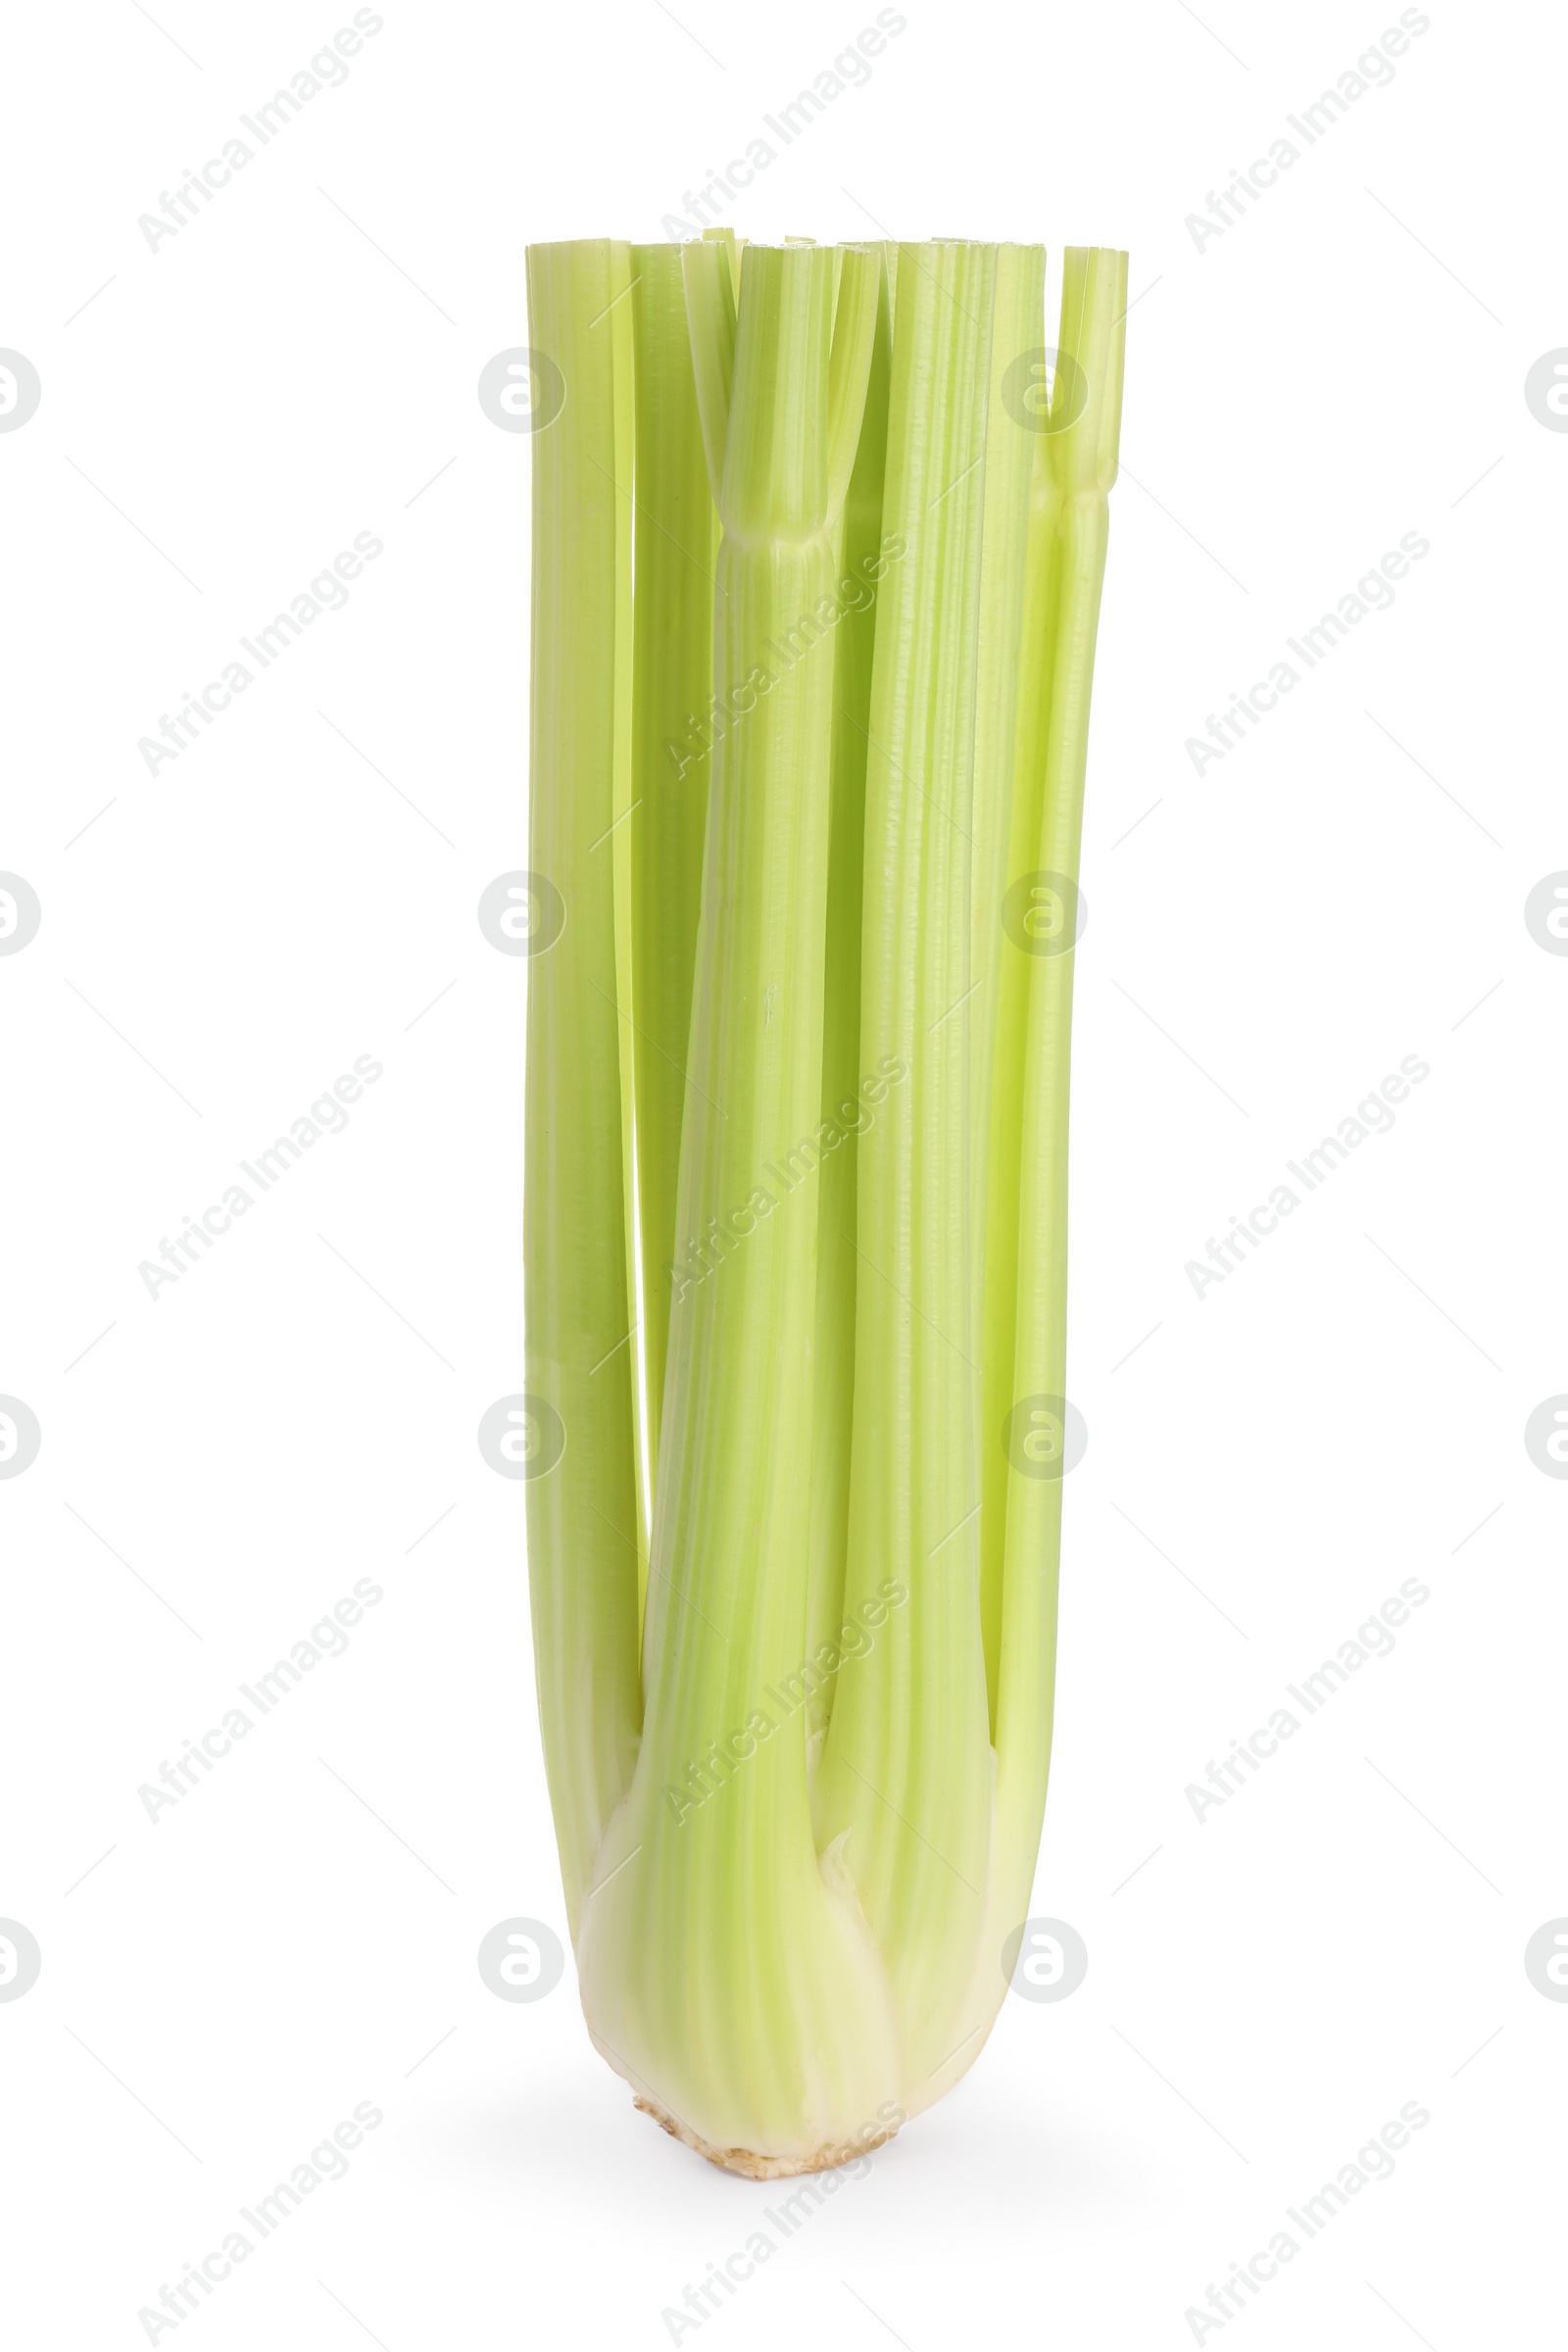 Photo of Fresh ripe green celery isolated on white